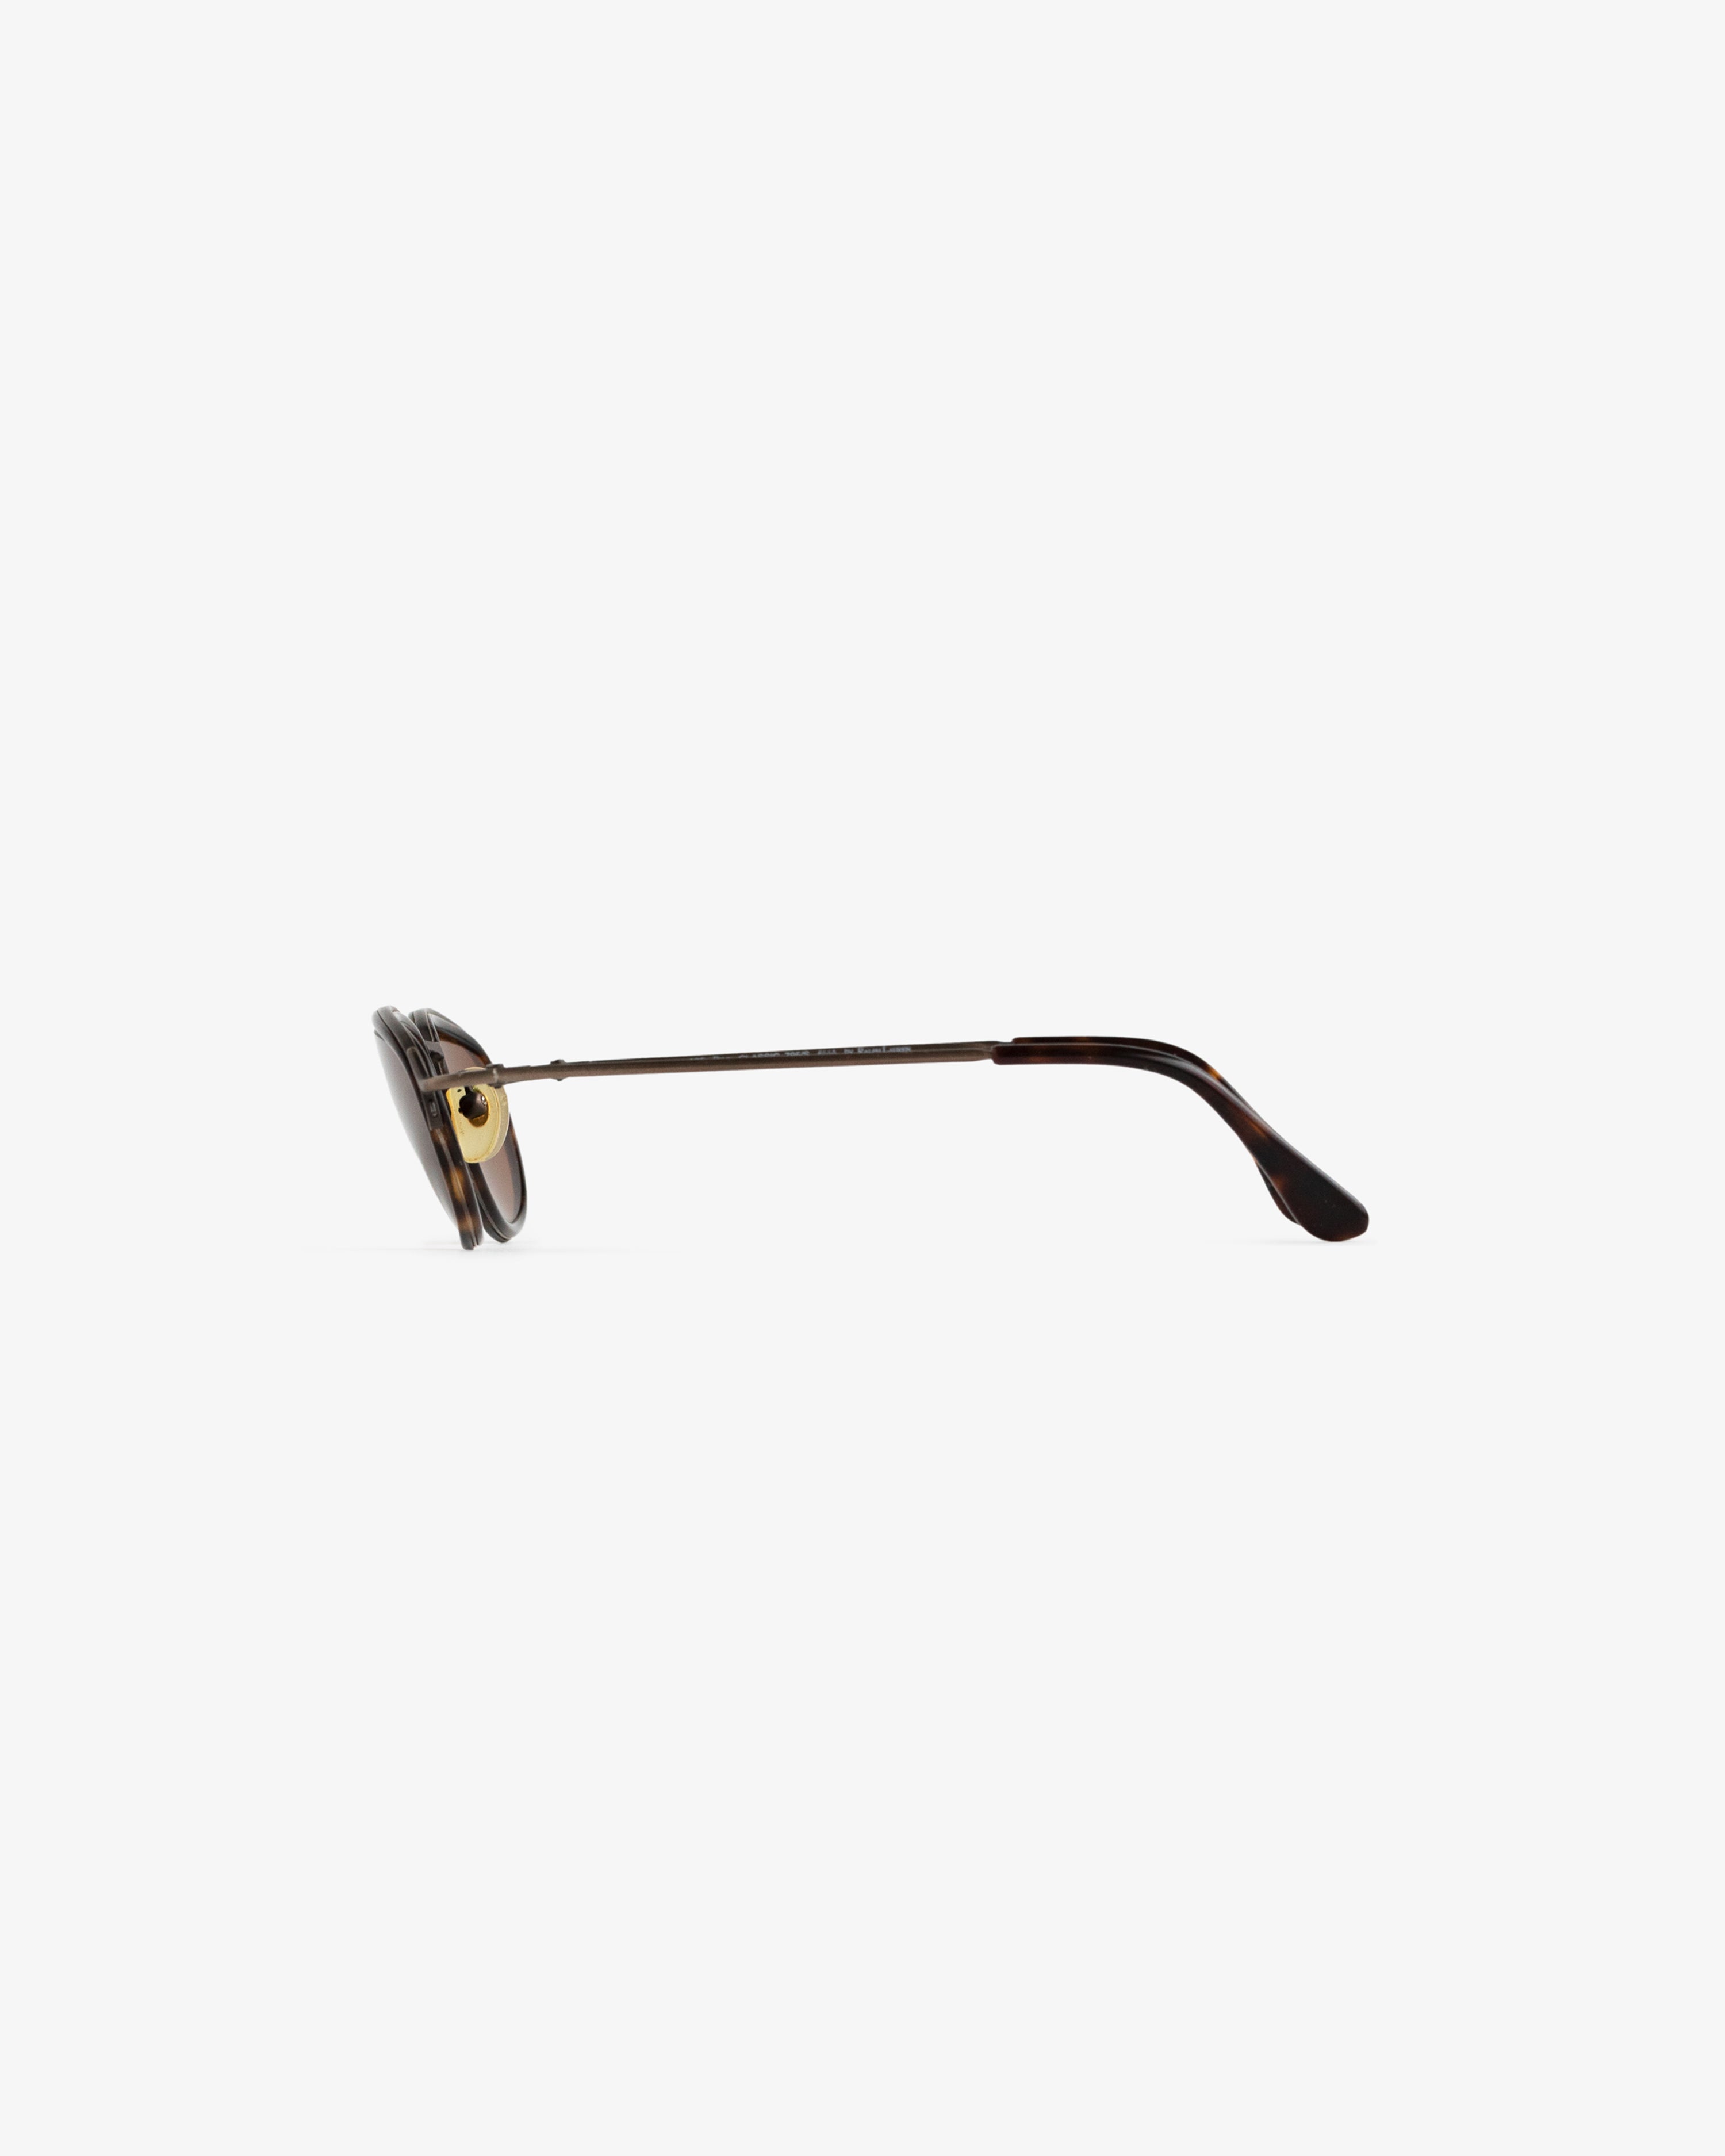 Polo Ralph Lauren 795 Sunglasses